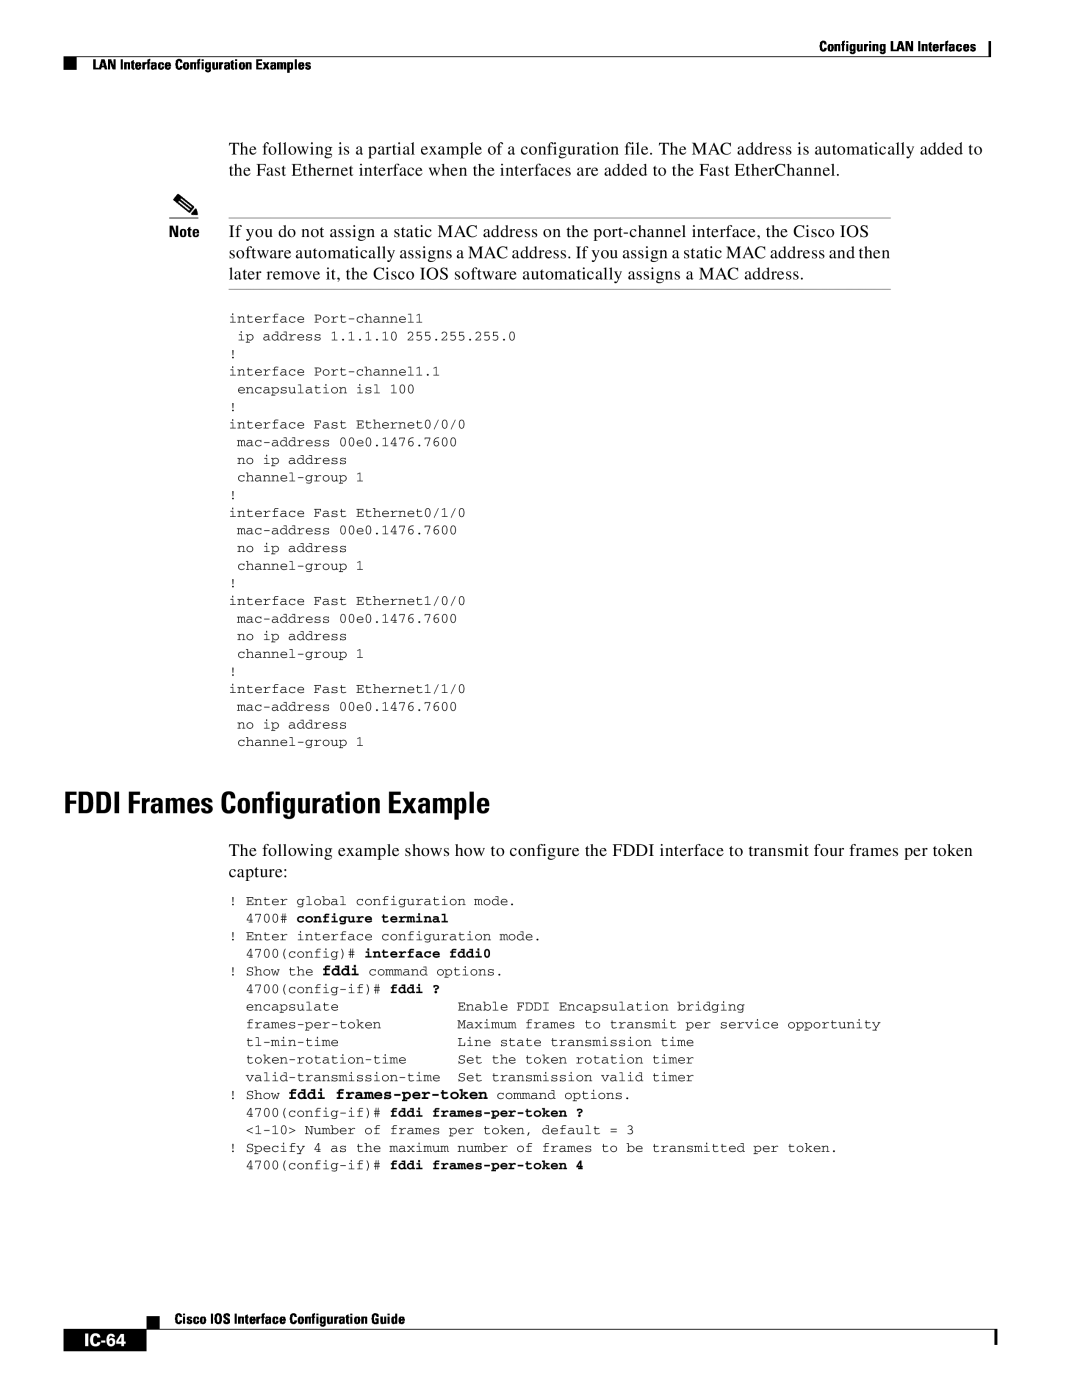 Cisco Systems IC-23 manual FDDI Frames Configuration Example, IC-64 